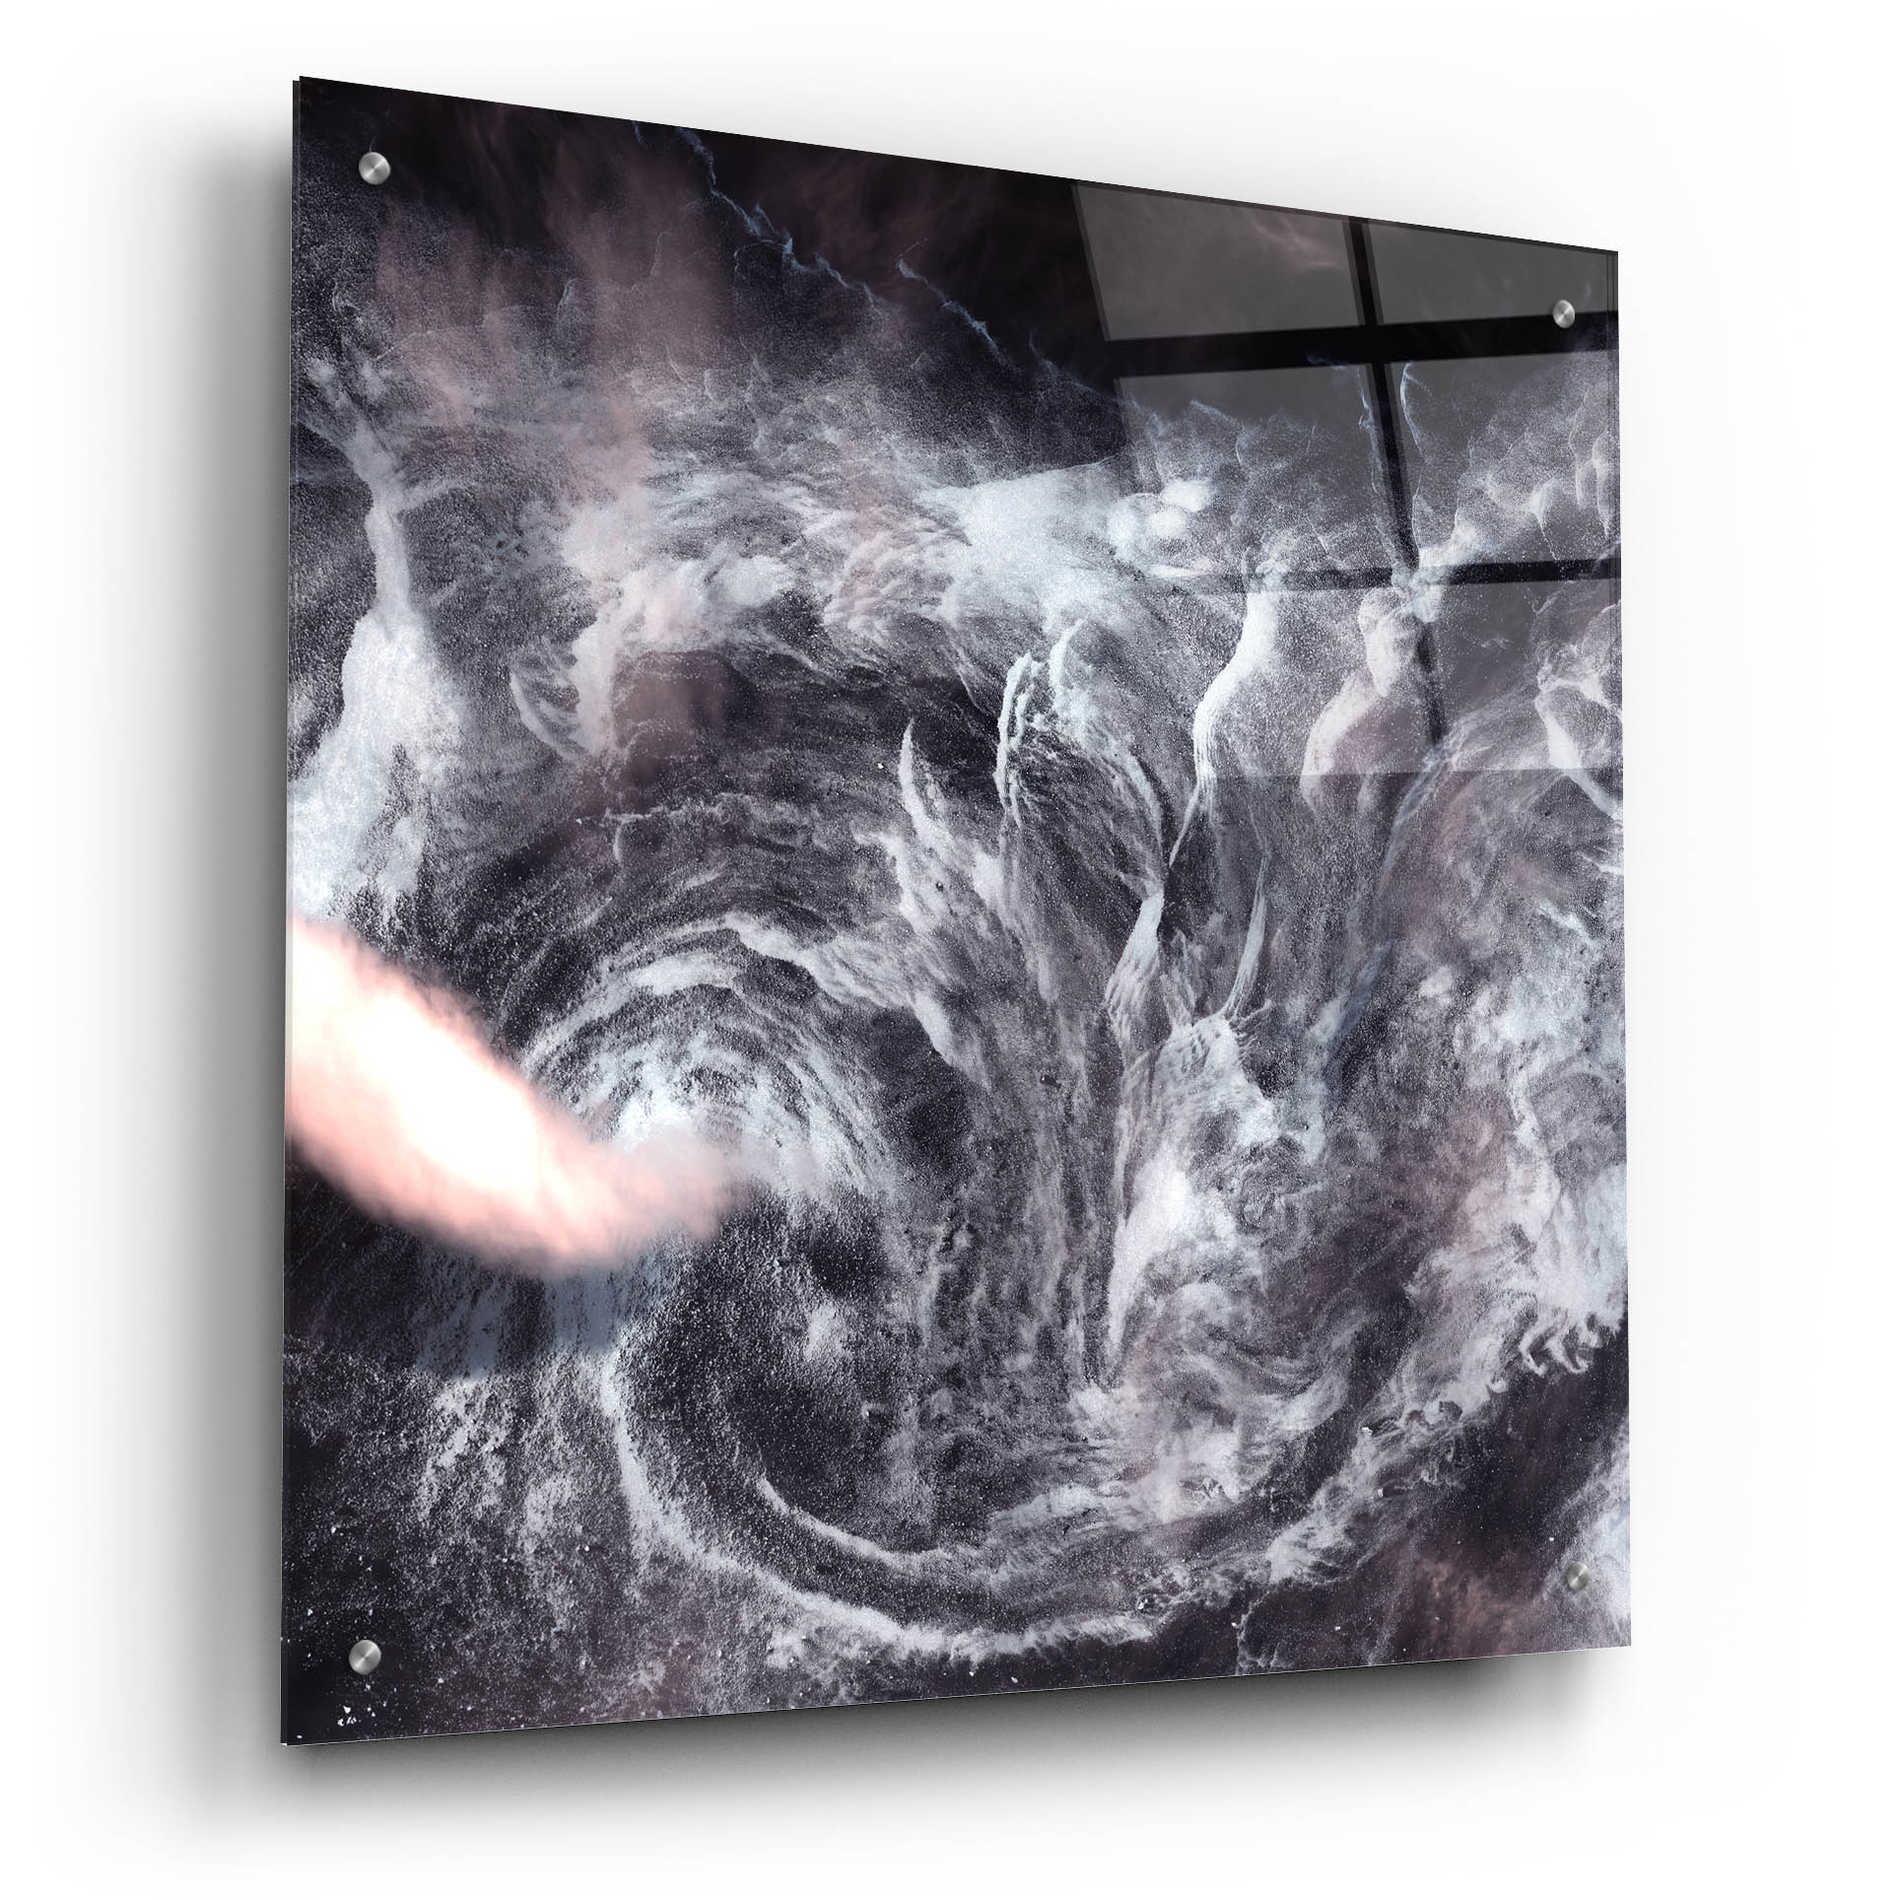 Epic Art 'Earth as Art: Whirlpool in the Air' Acrylic Glass Wall Art,24x24